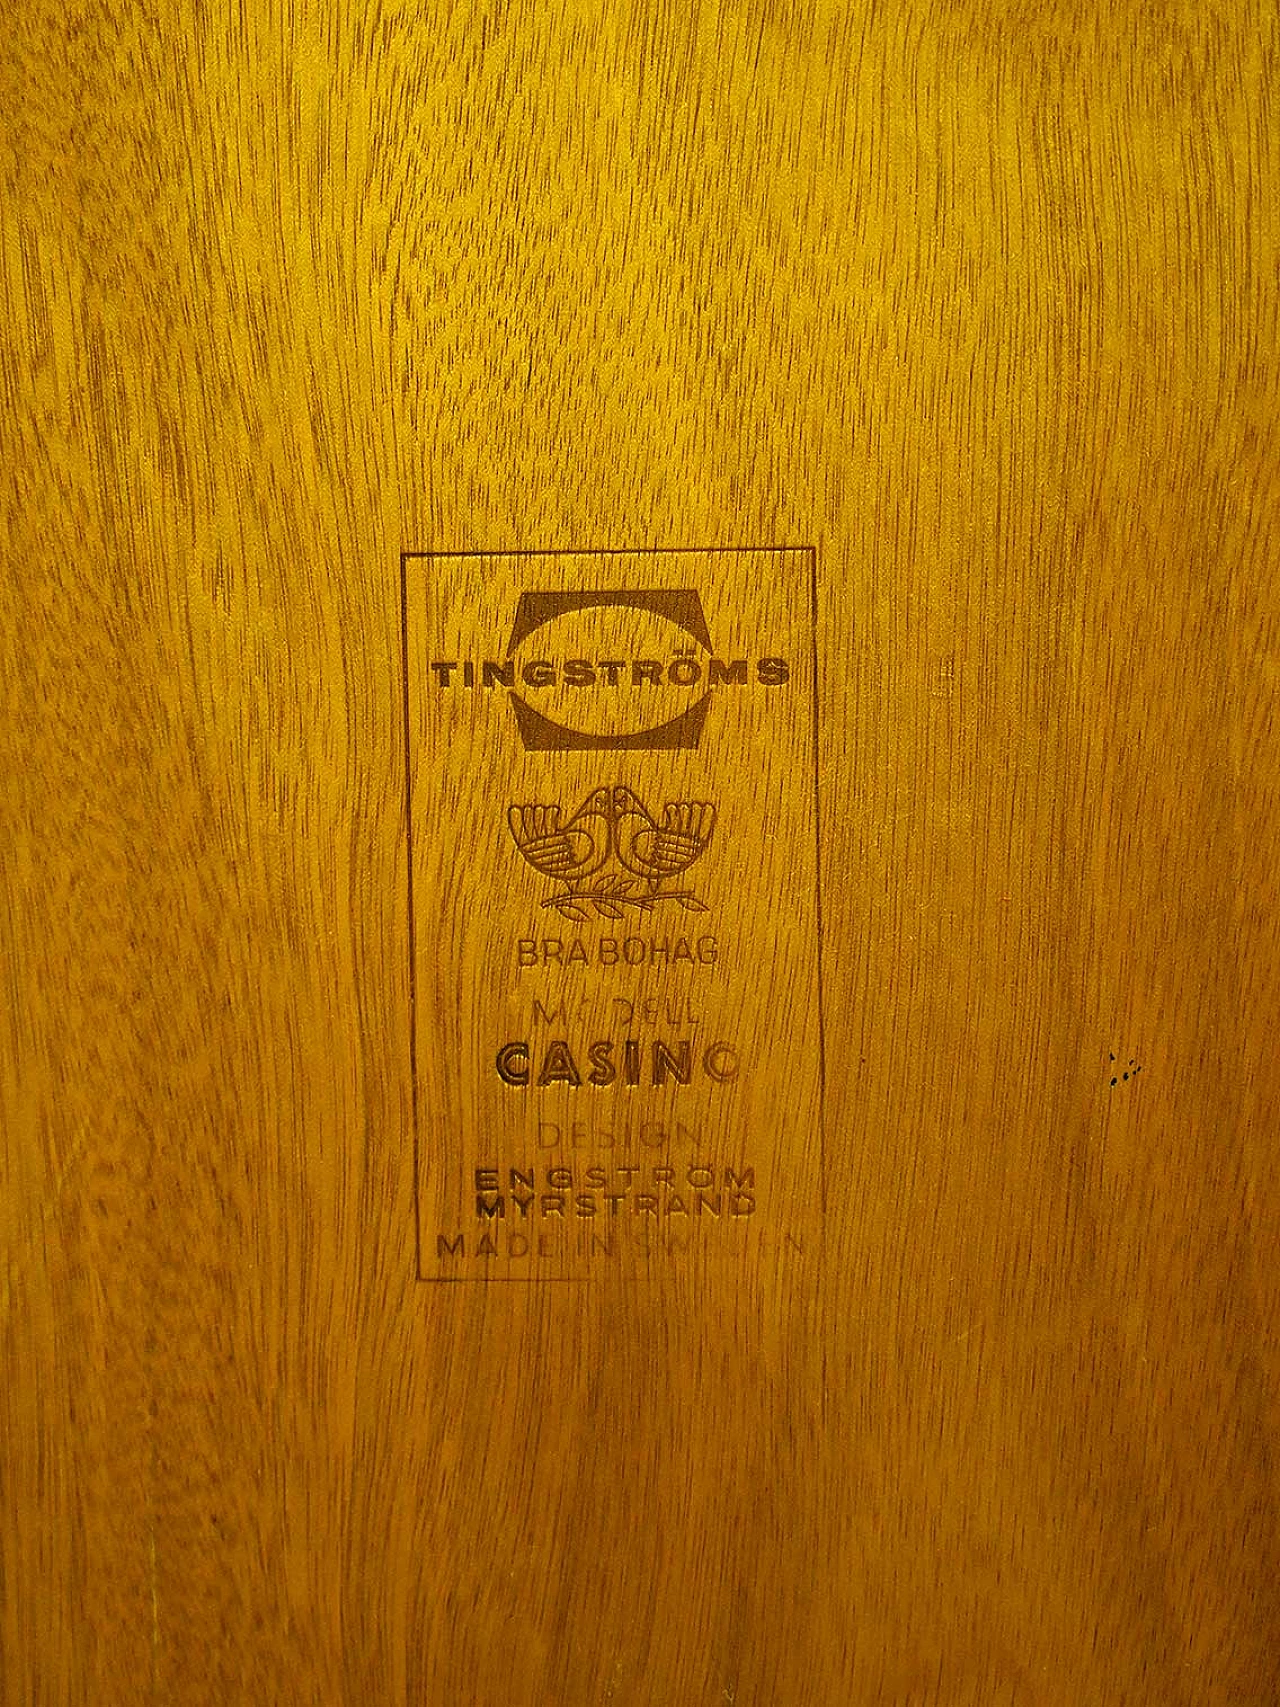 Casino gossip bench by Engström and Myrstrand for Tingströms Bra Bohag, 1960s 10